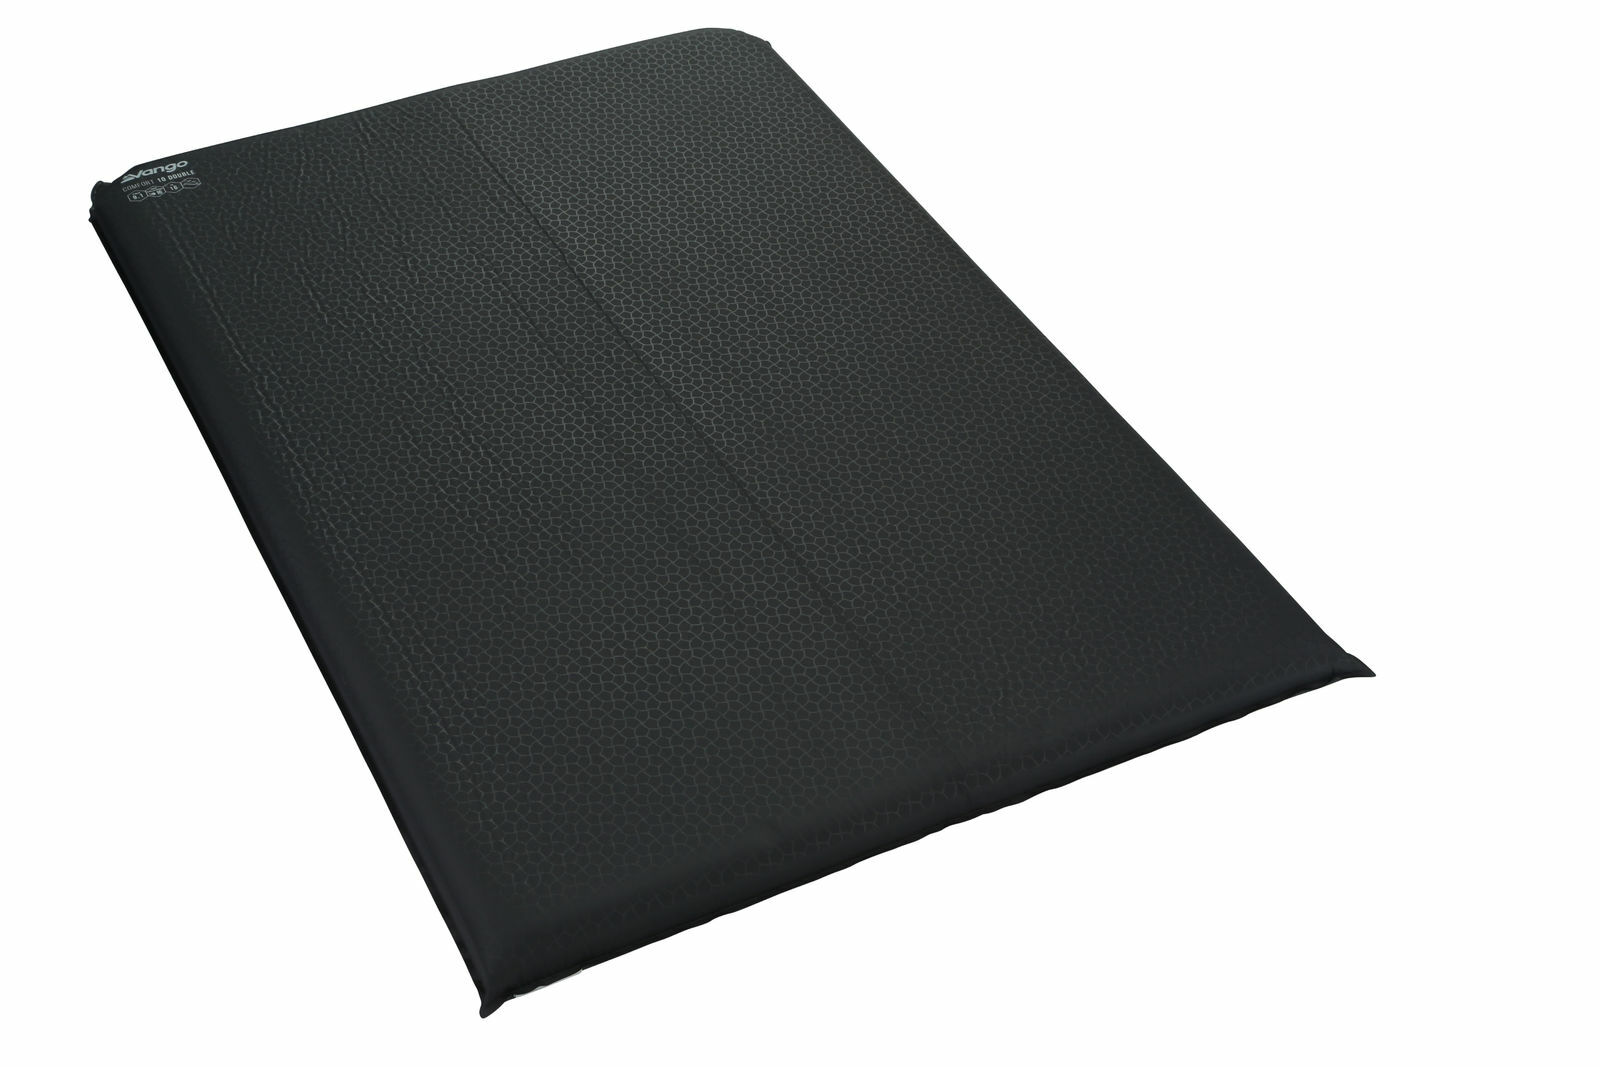 Three-quarter view of the Vango Comfort 10 Double Self-Inflating Mat in dark grey